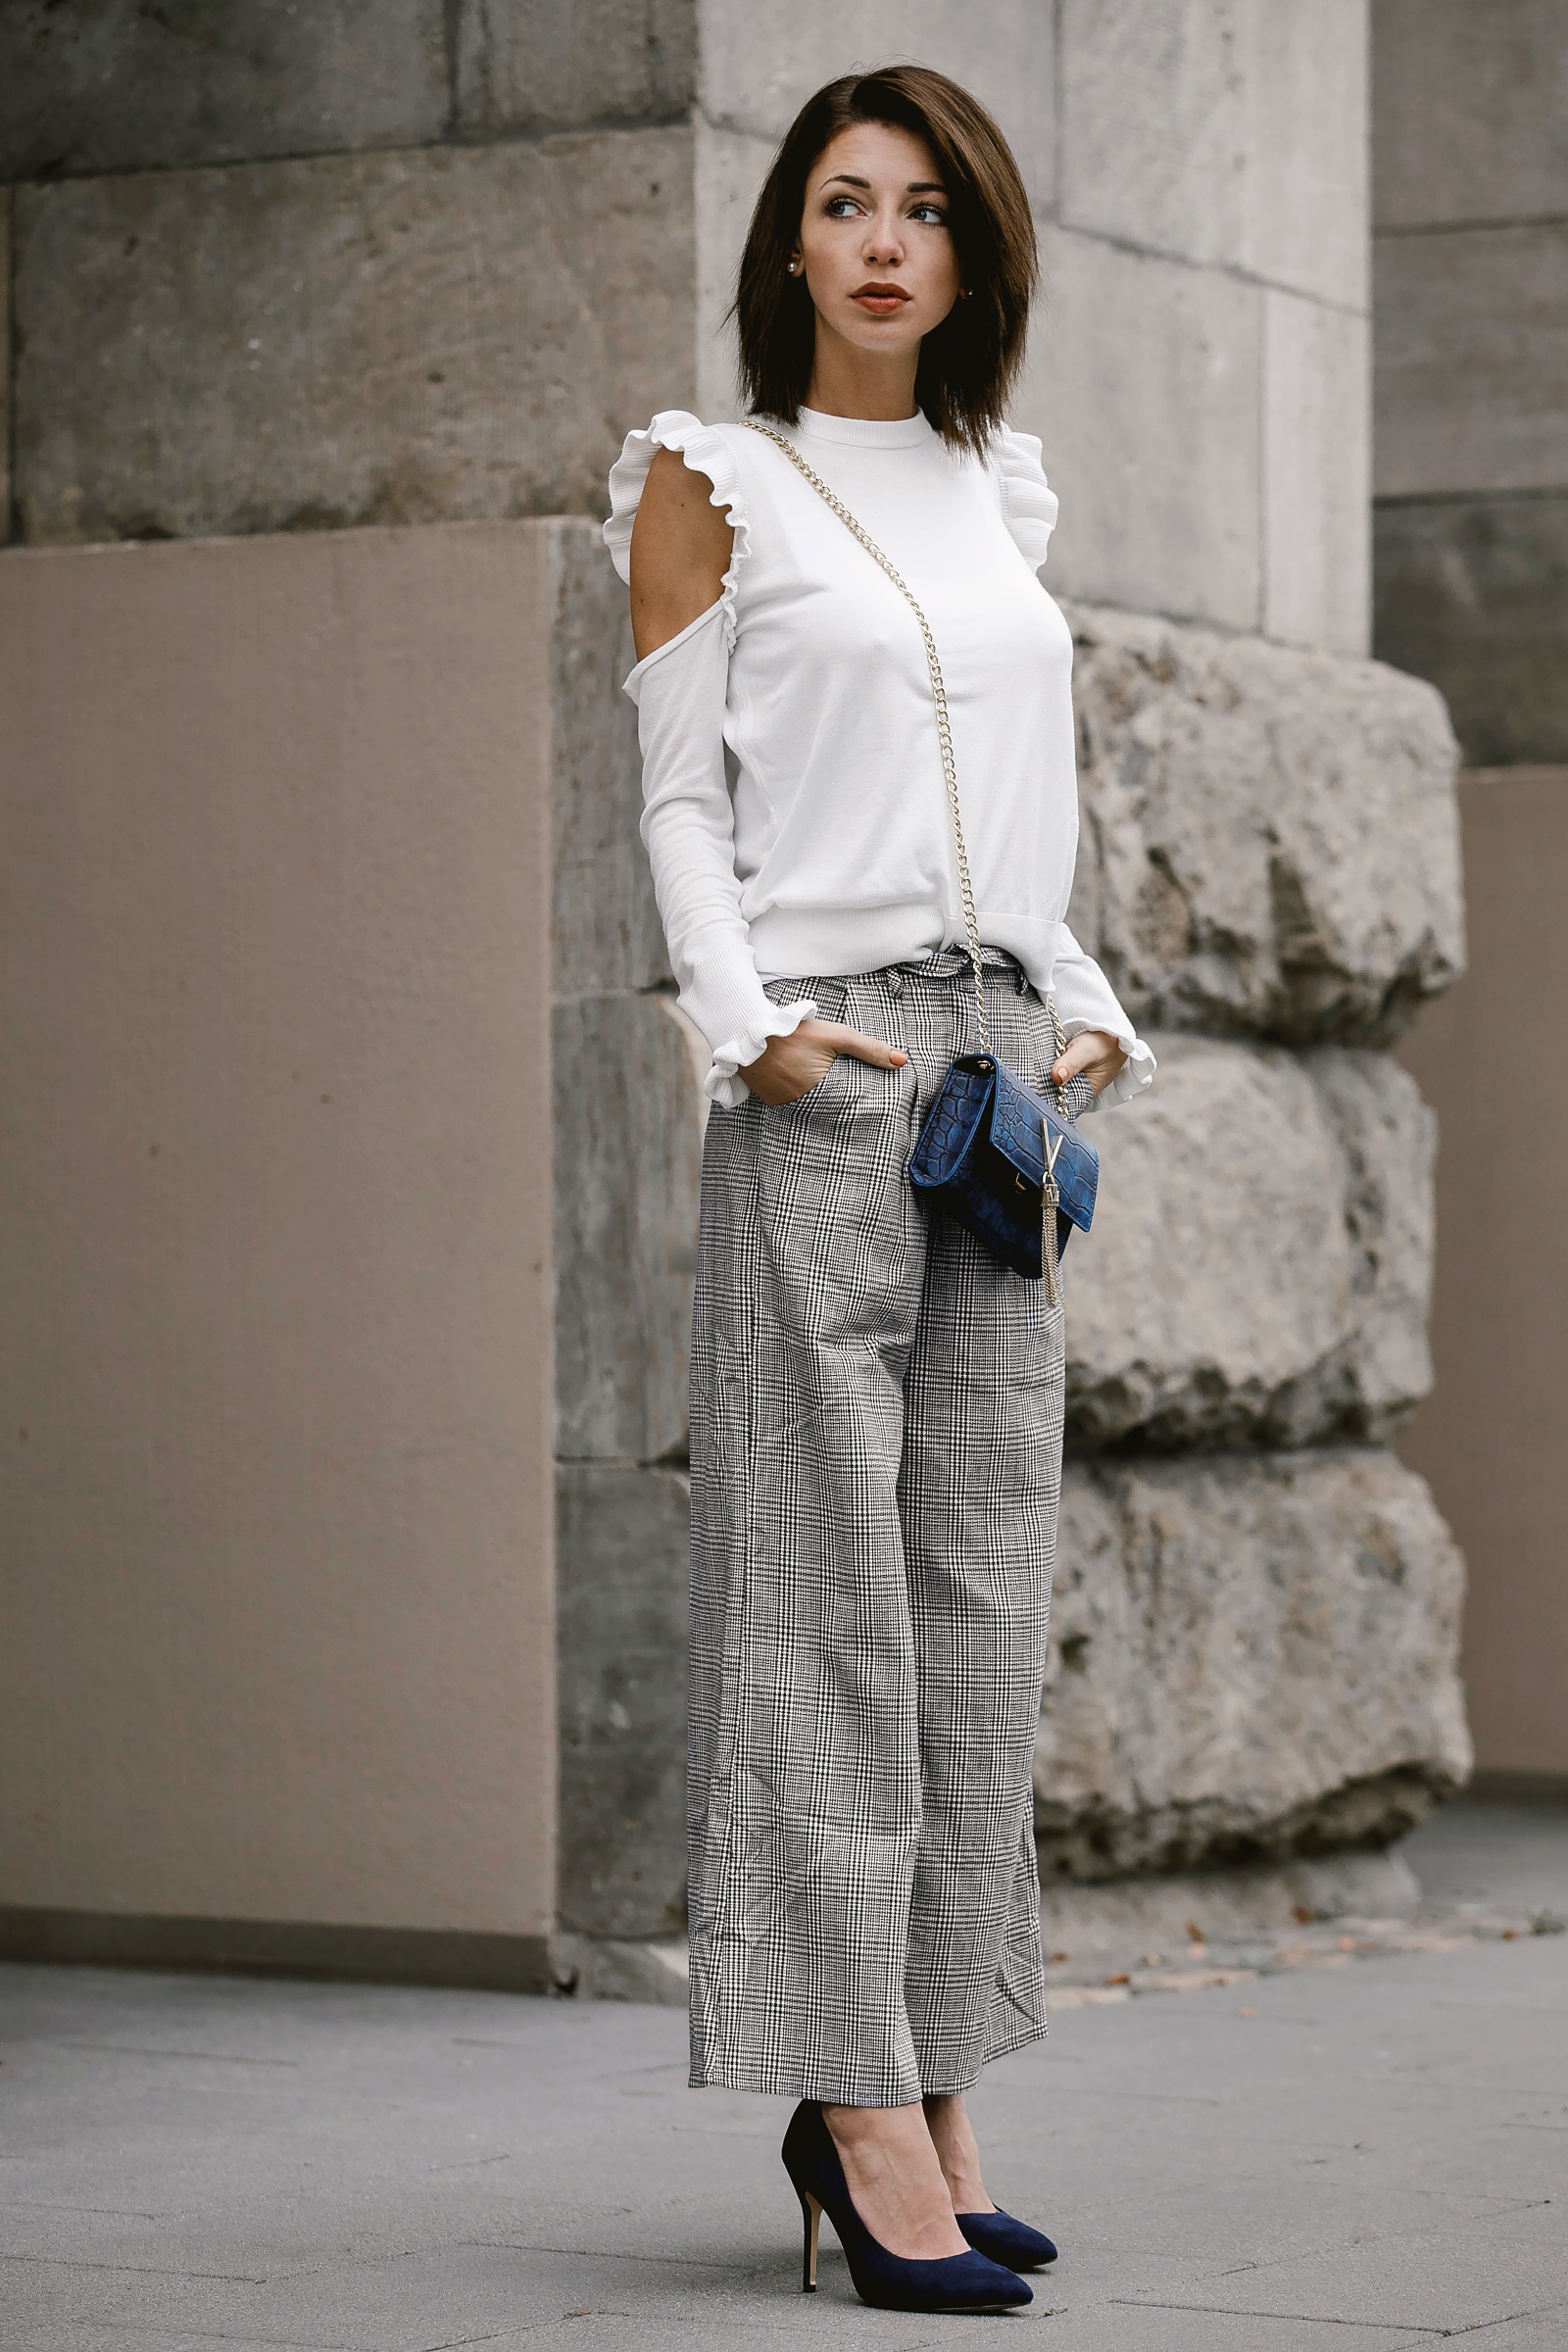 deutsche-mode-blogger-streetstyle-outfit-jasmin-kessler-fashion-look-2017